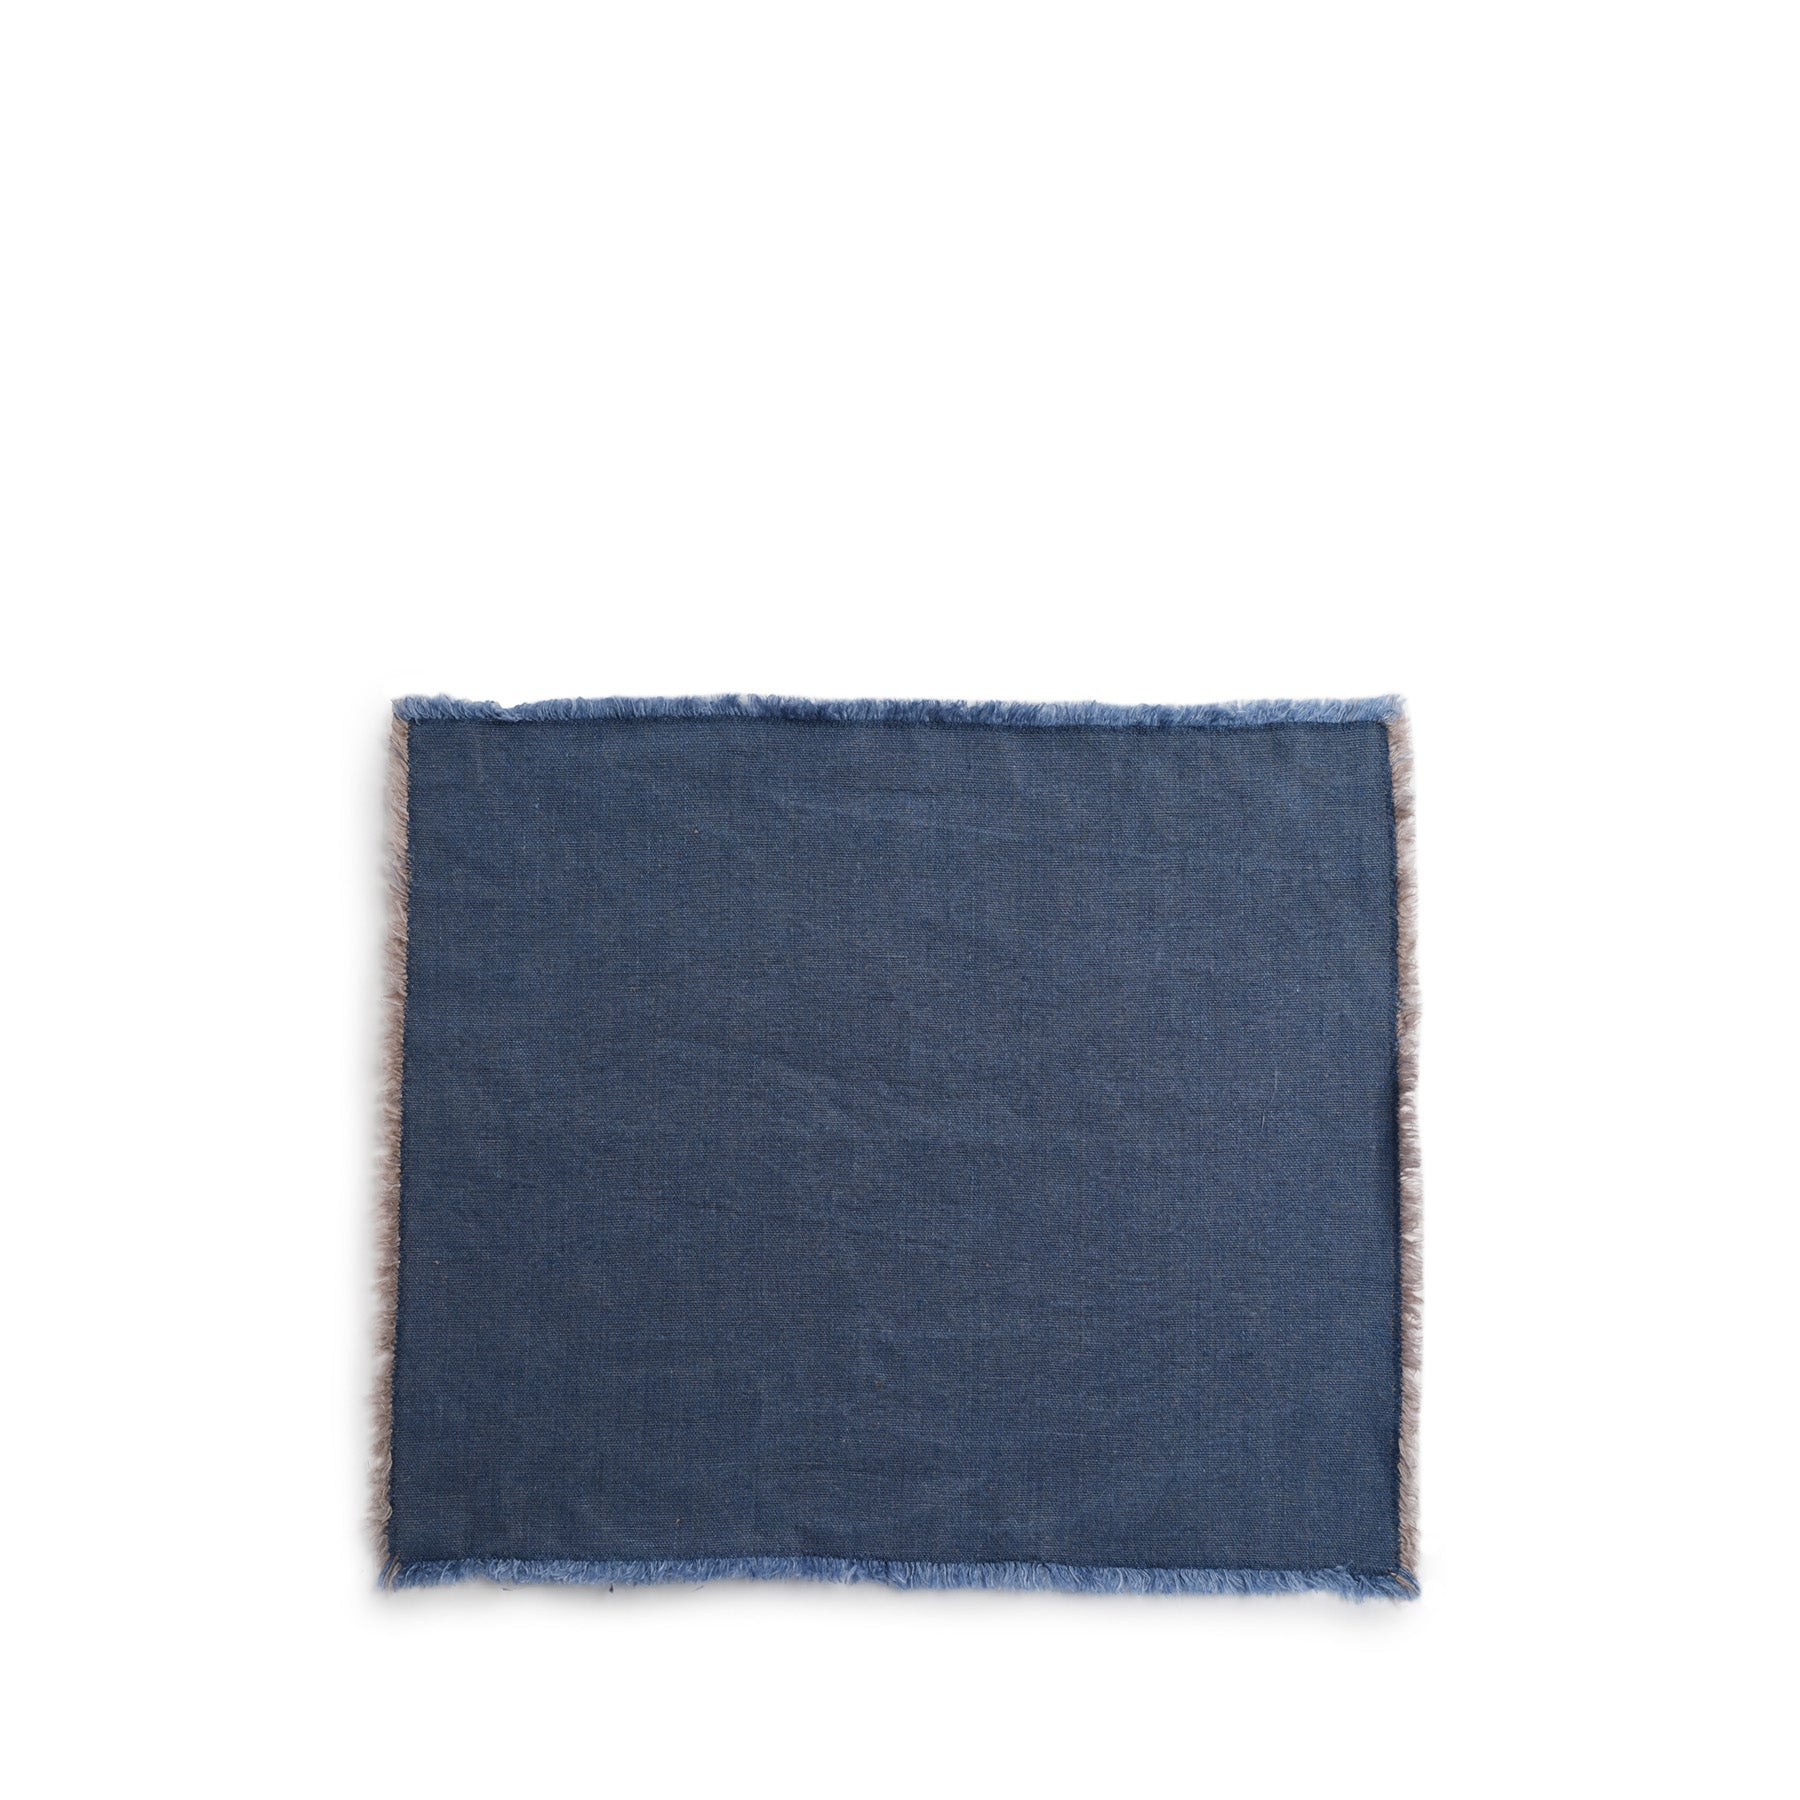 Linen Hopsack Placemat in Indigo Blue Zoom Image 1